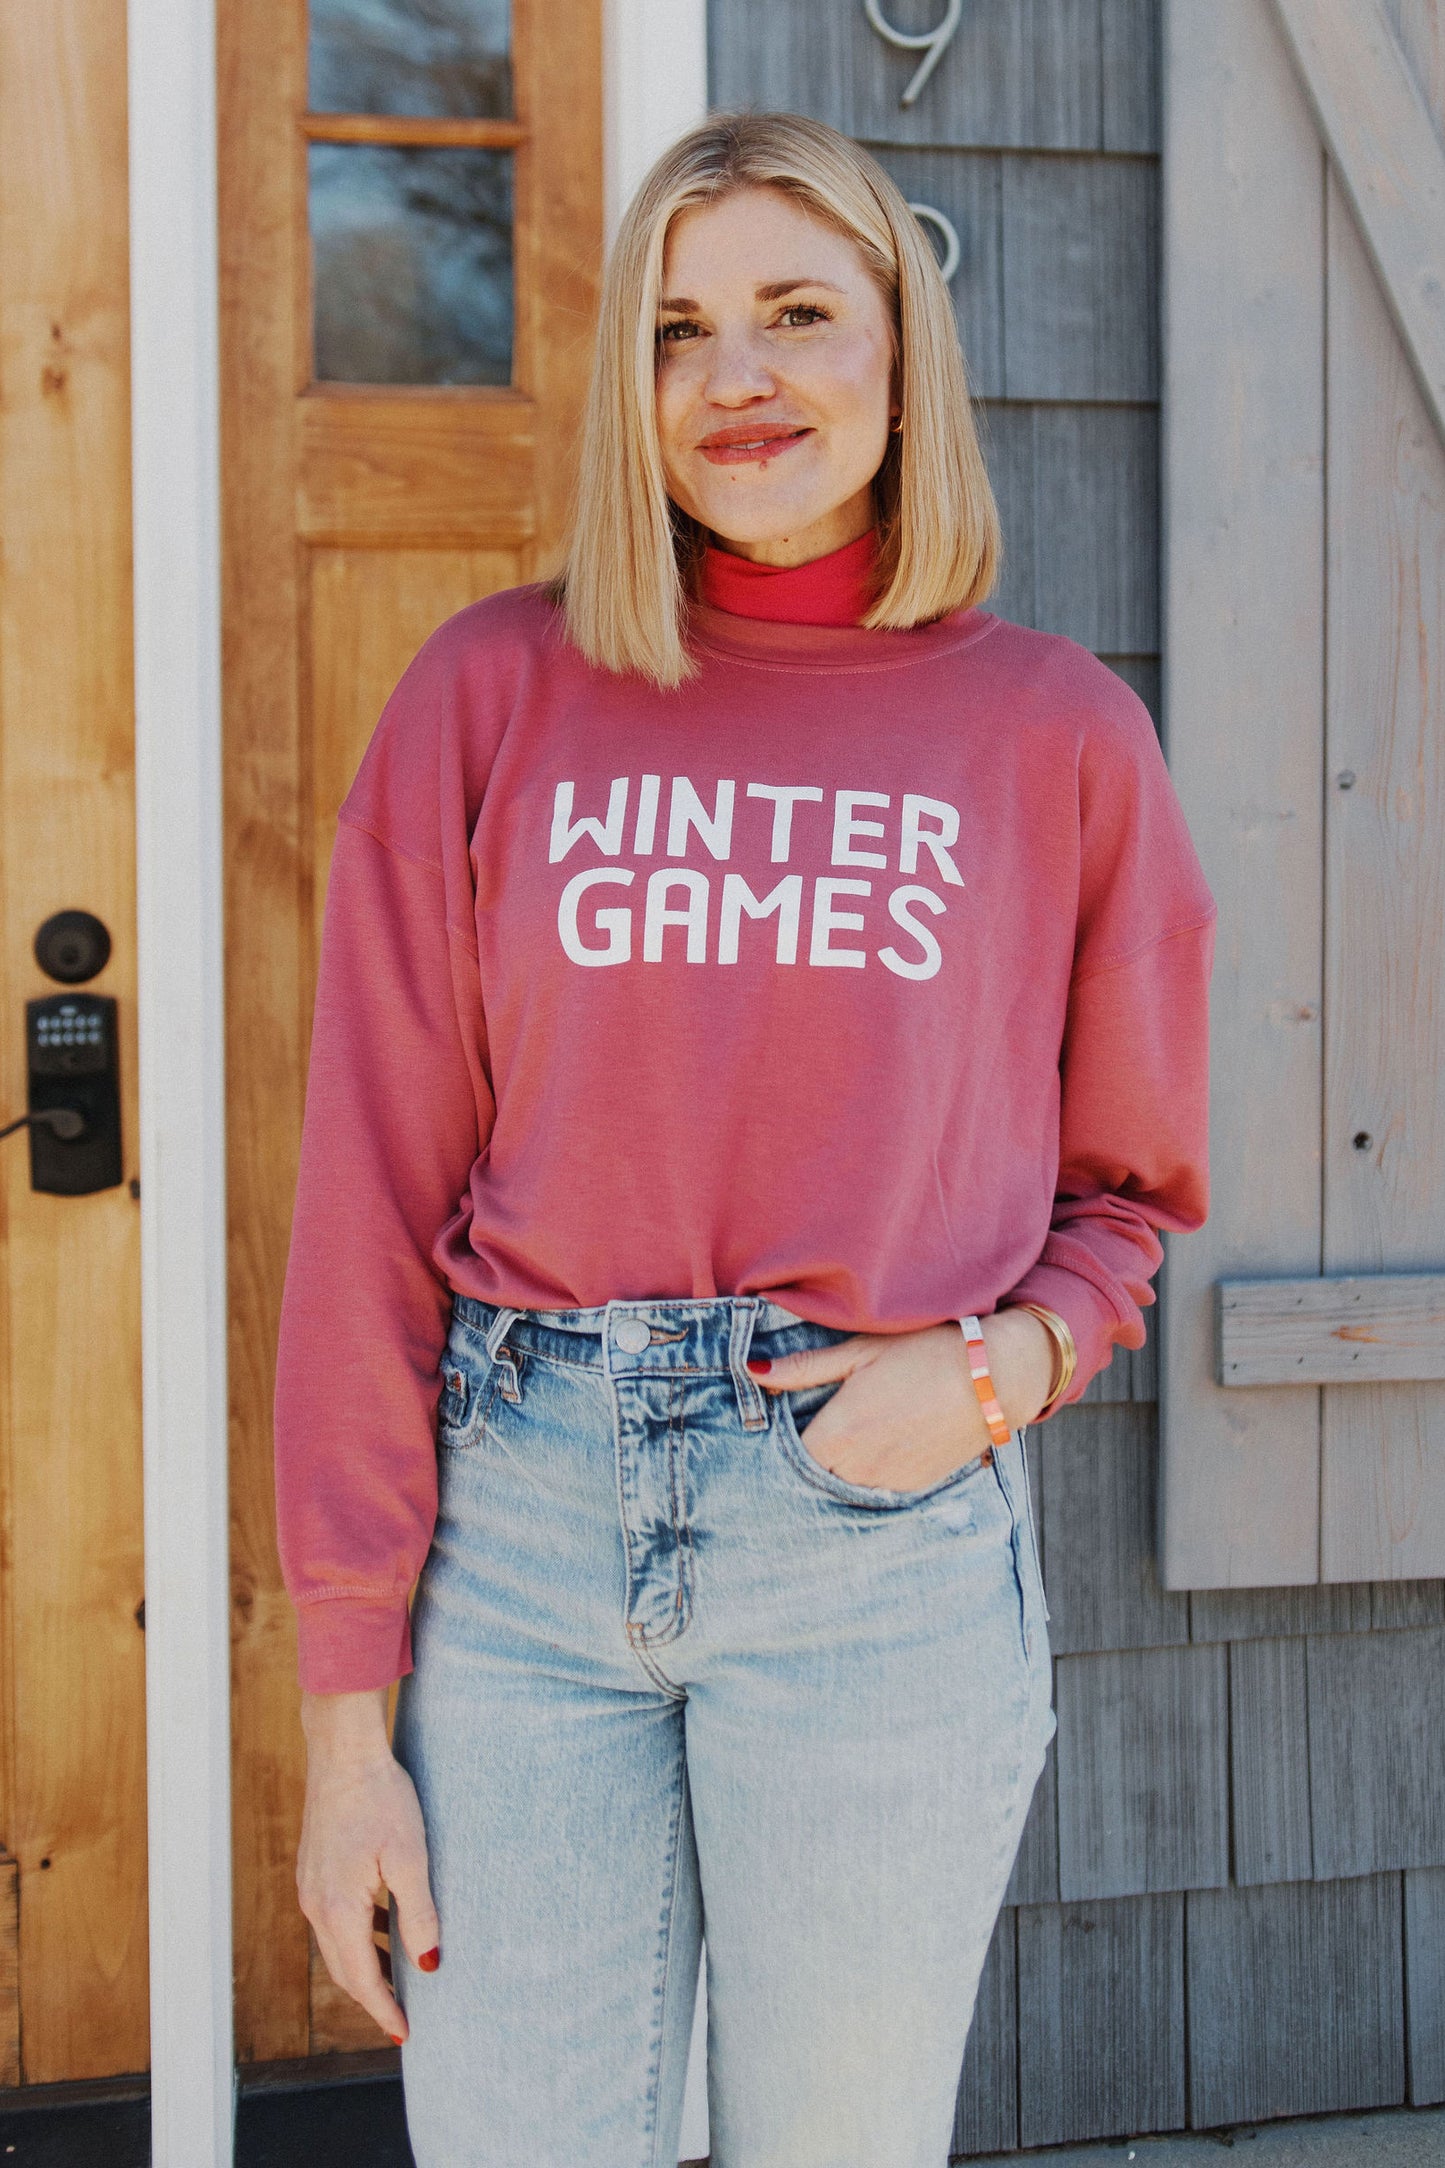 Winter Gems: The Mockneck Sweatshirt I Knew I Needed - Blogilates